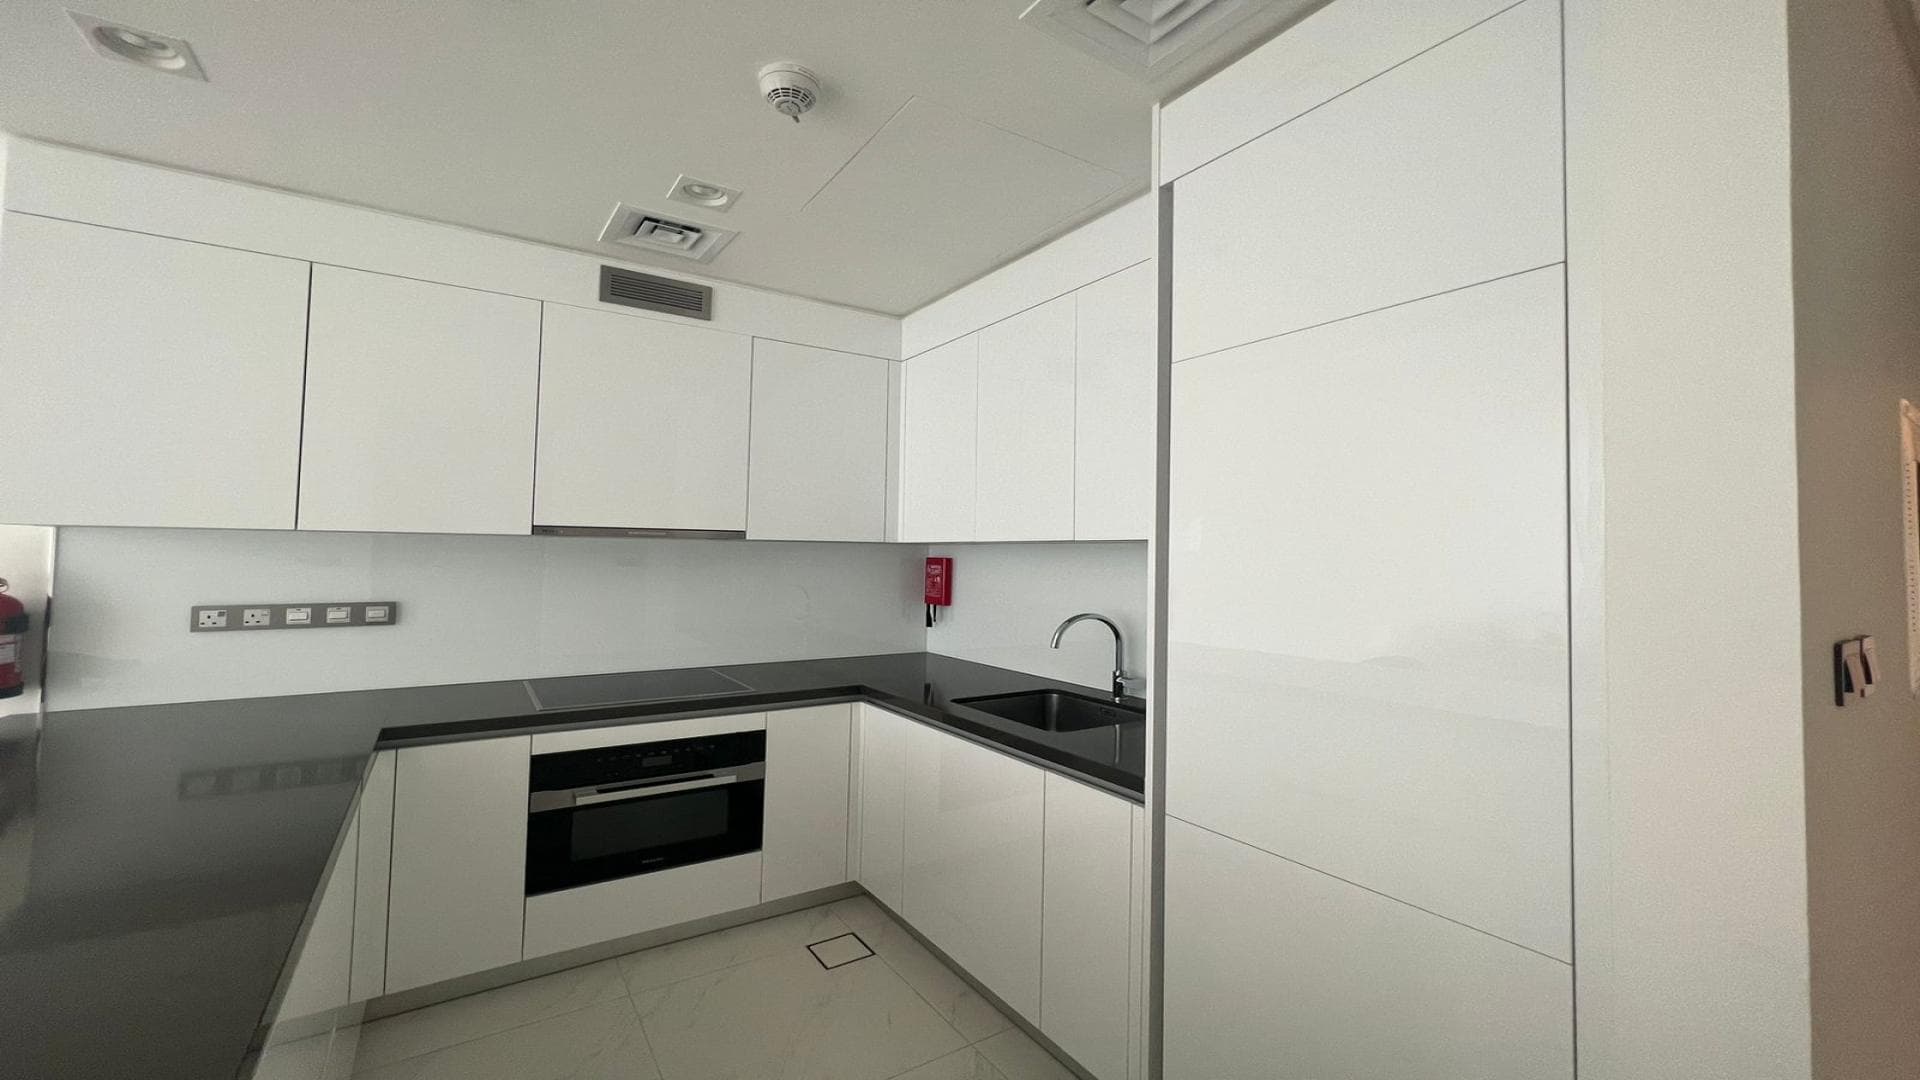 1 Bedroom Apartment For Rent  Lp37932 3004281ade793200.jpg